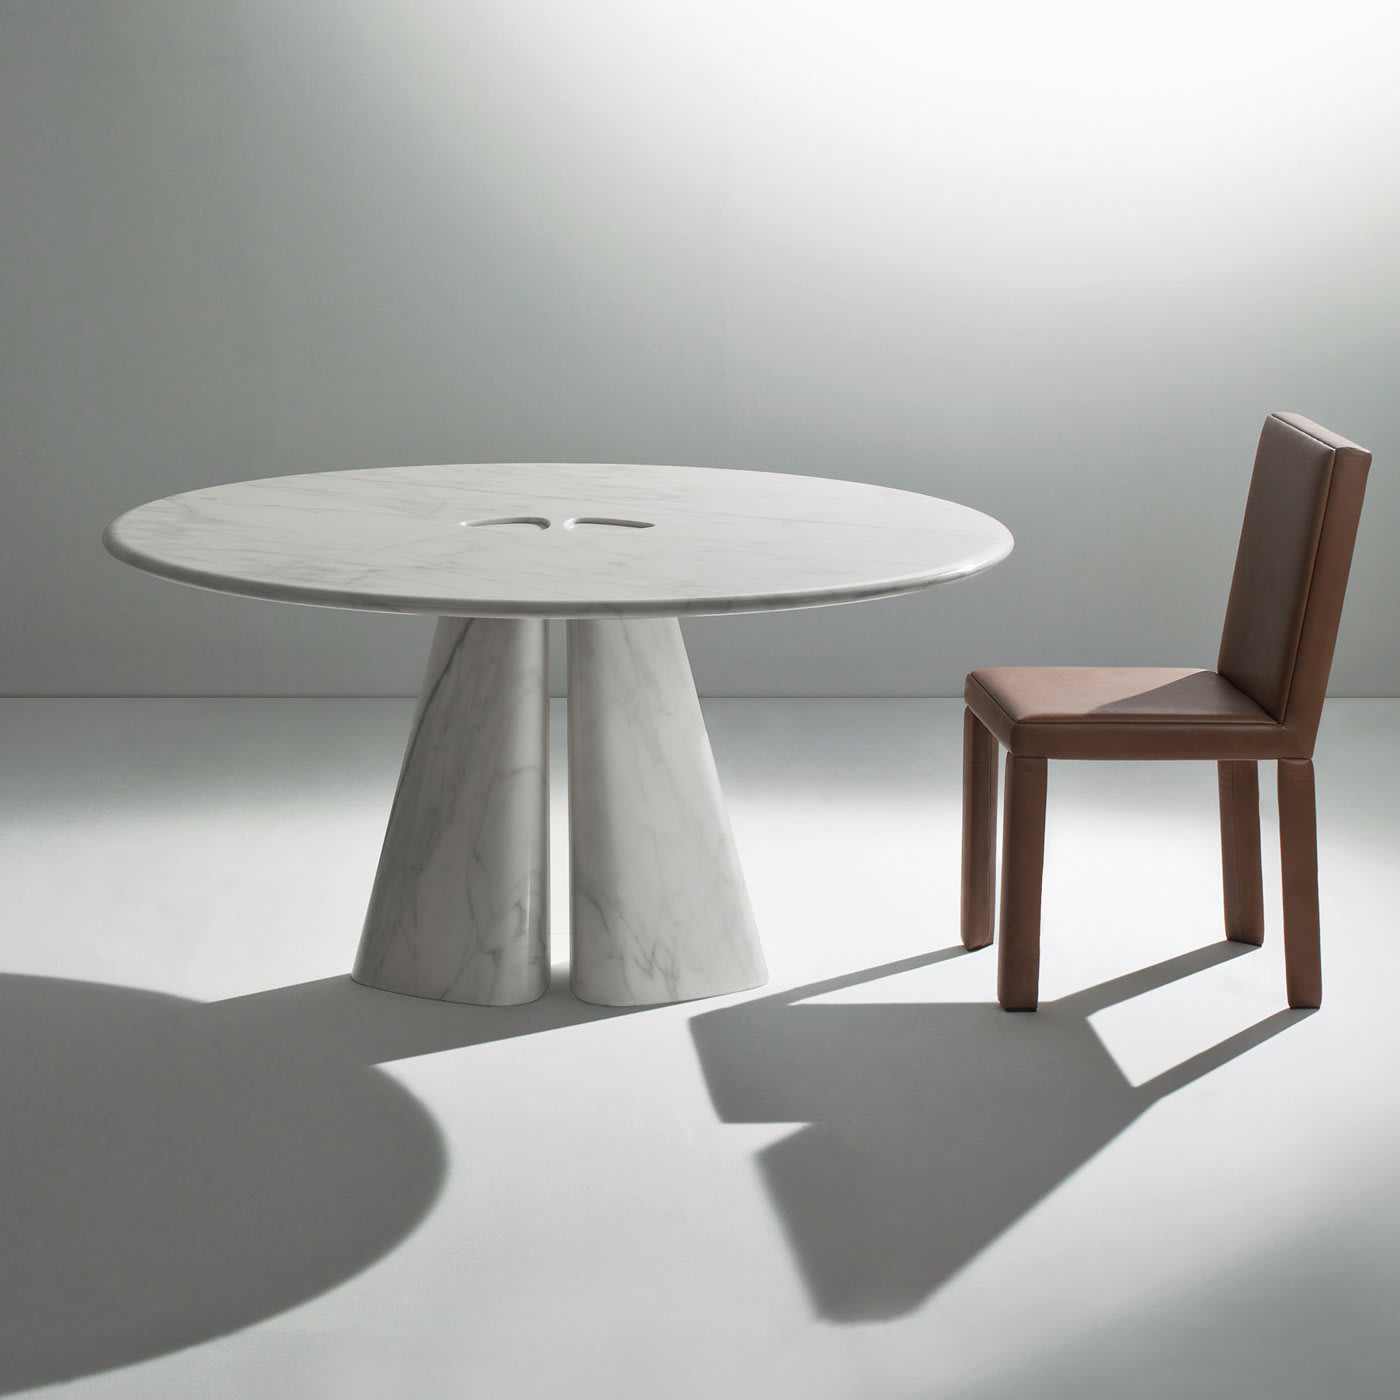 Raja Round Table by Bartoli Design - Laura Meroni